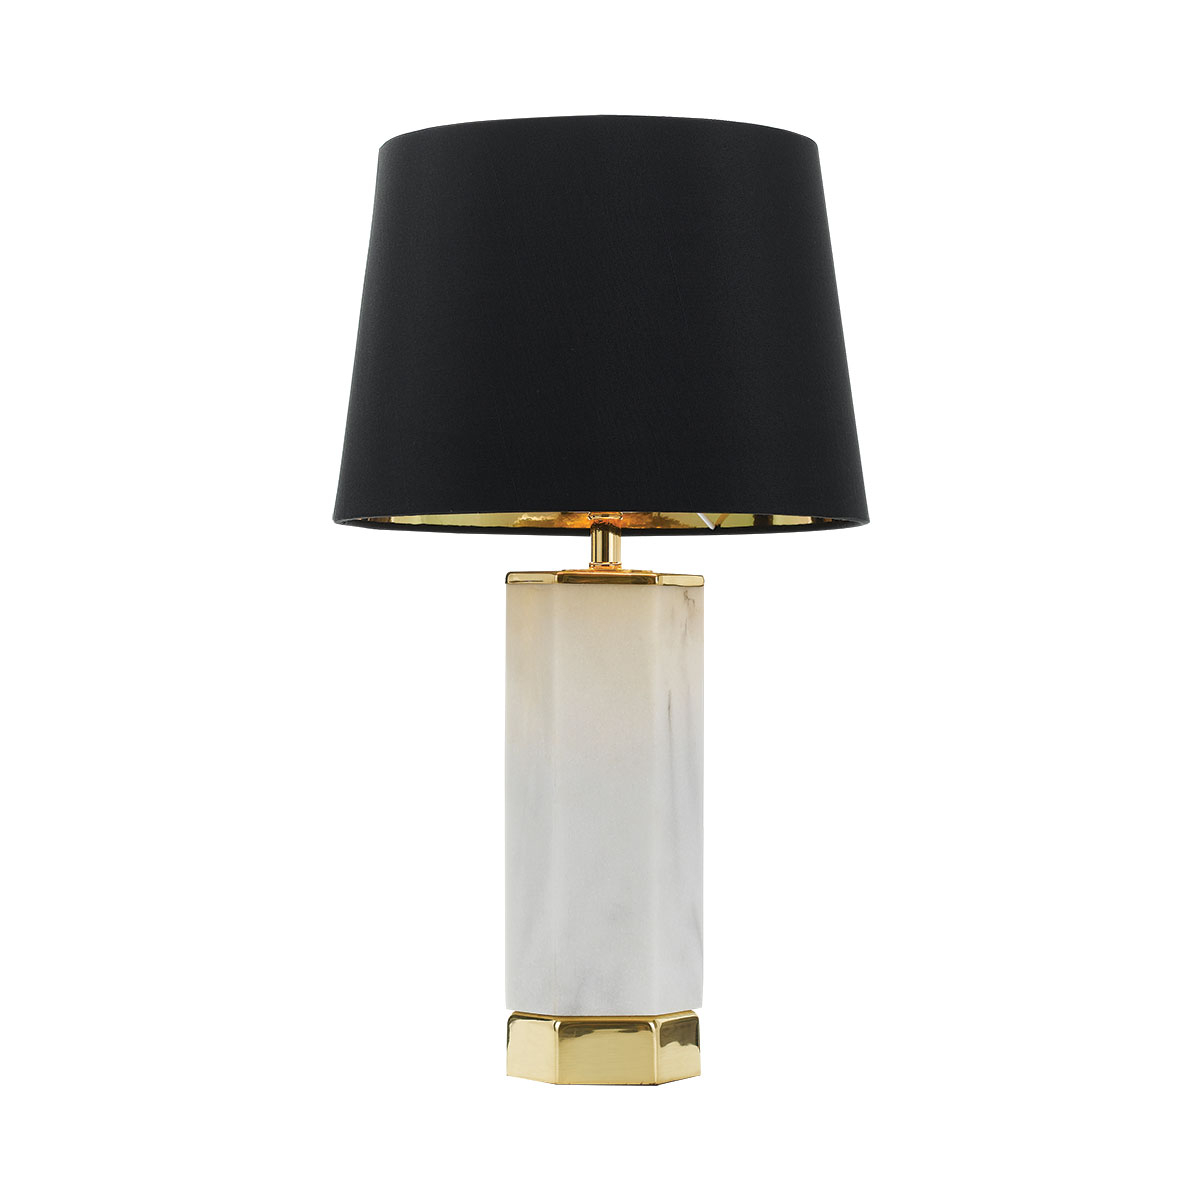 Agora 1 Light Table Lamp Gold Marble Black Agora Tl Gdbk within size 1200 X 1200